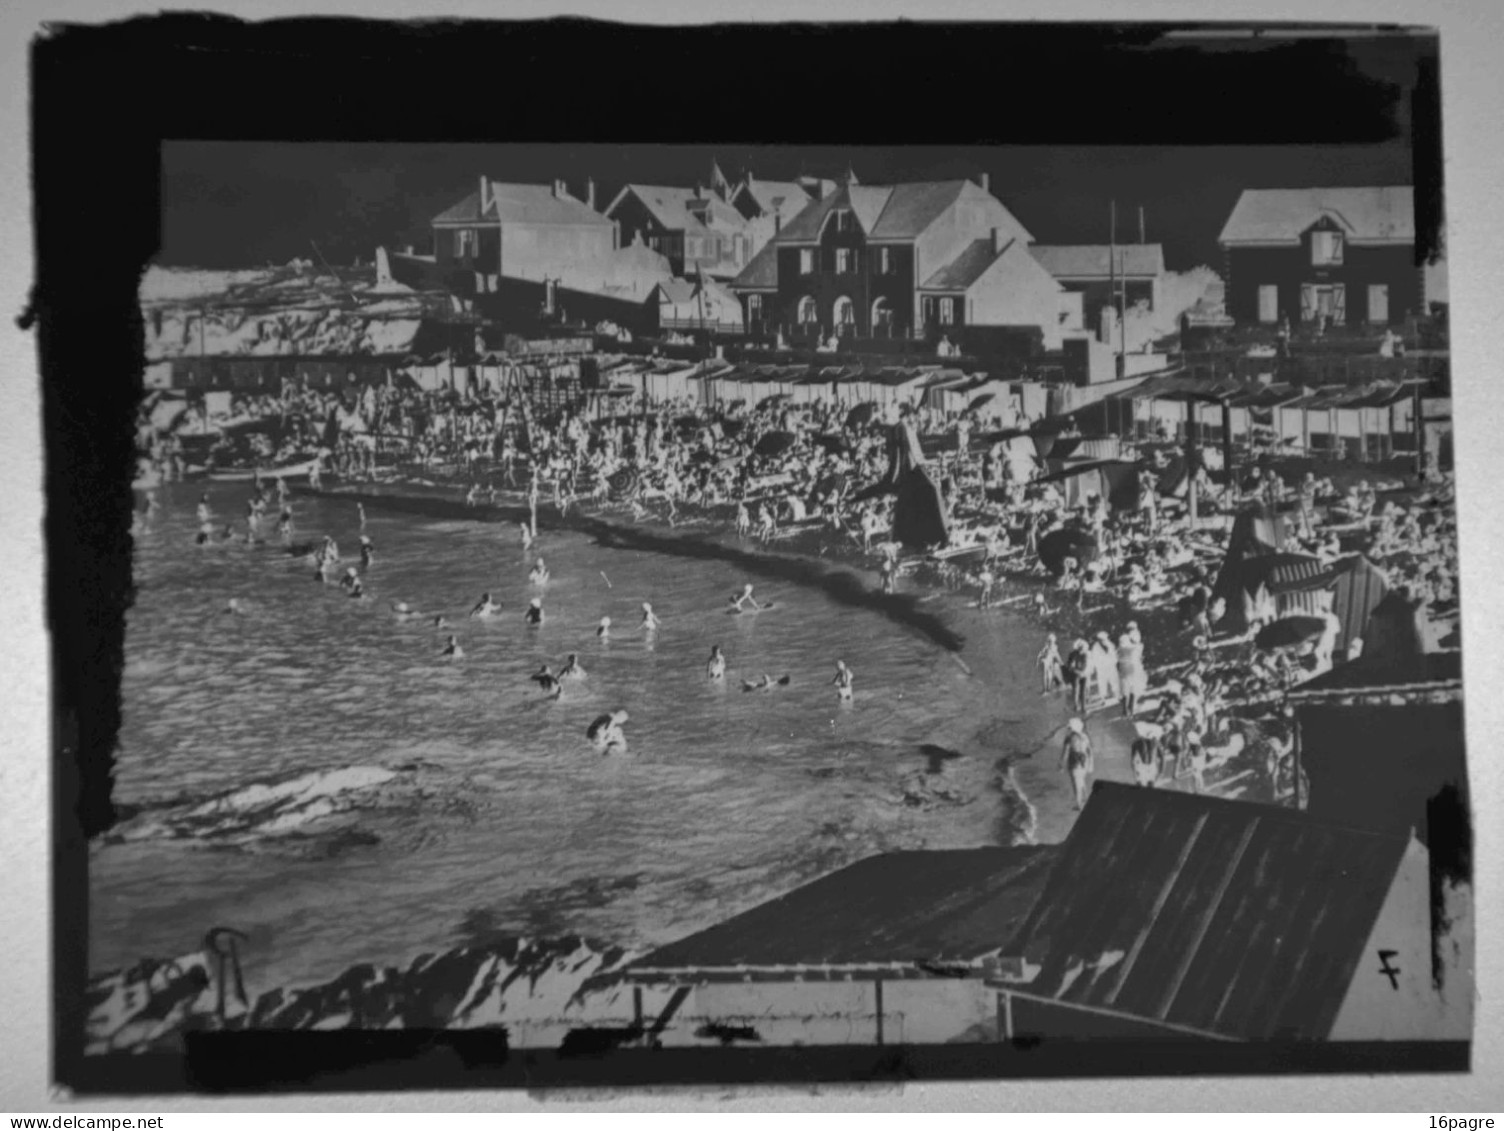 PLAQUE DE VERRE. PLAGE DE BATZ-SUR-MER, LOIRE-ATLANTIQUE. VERS 1950 - Diapositiva Su Vetro